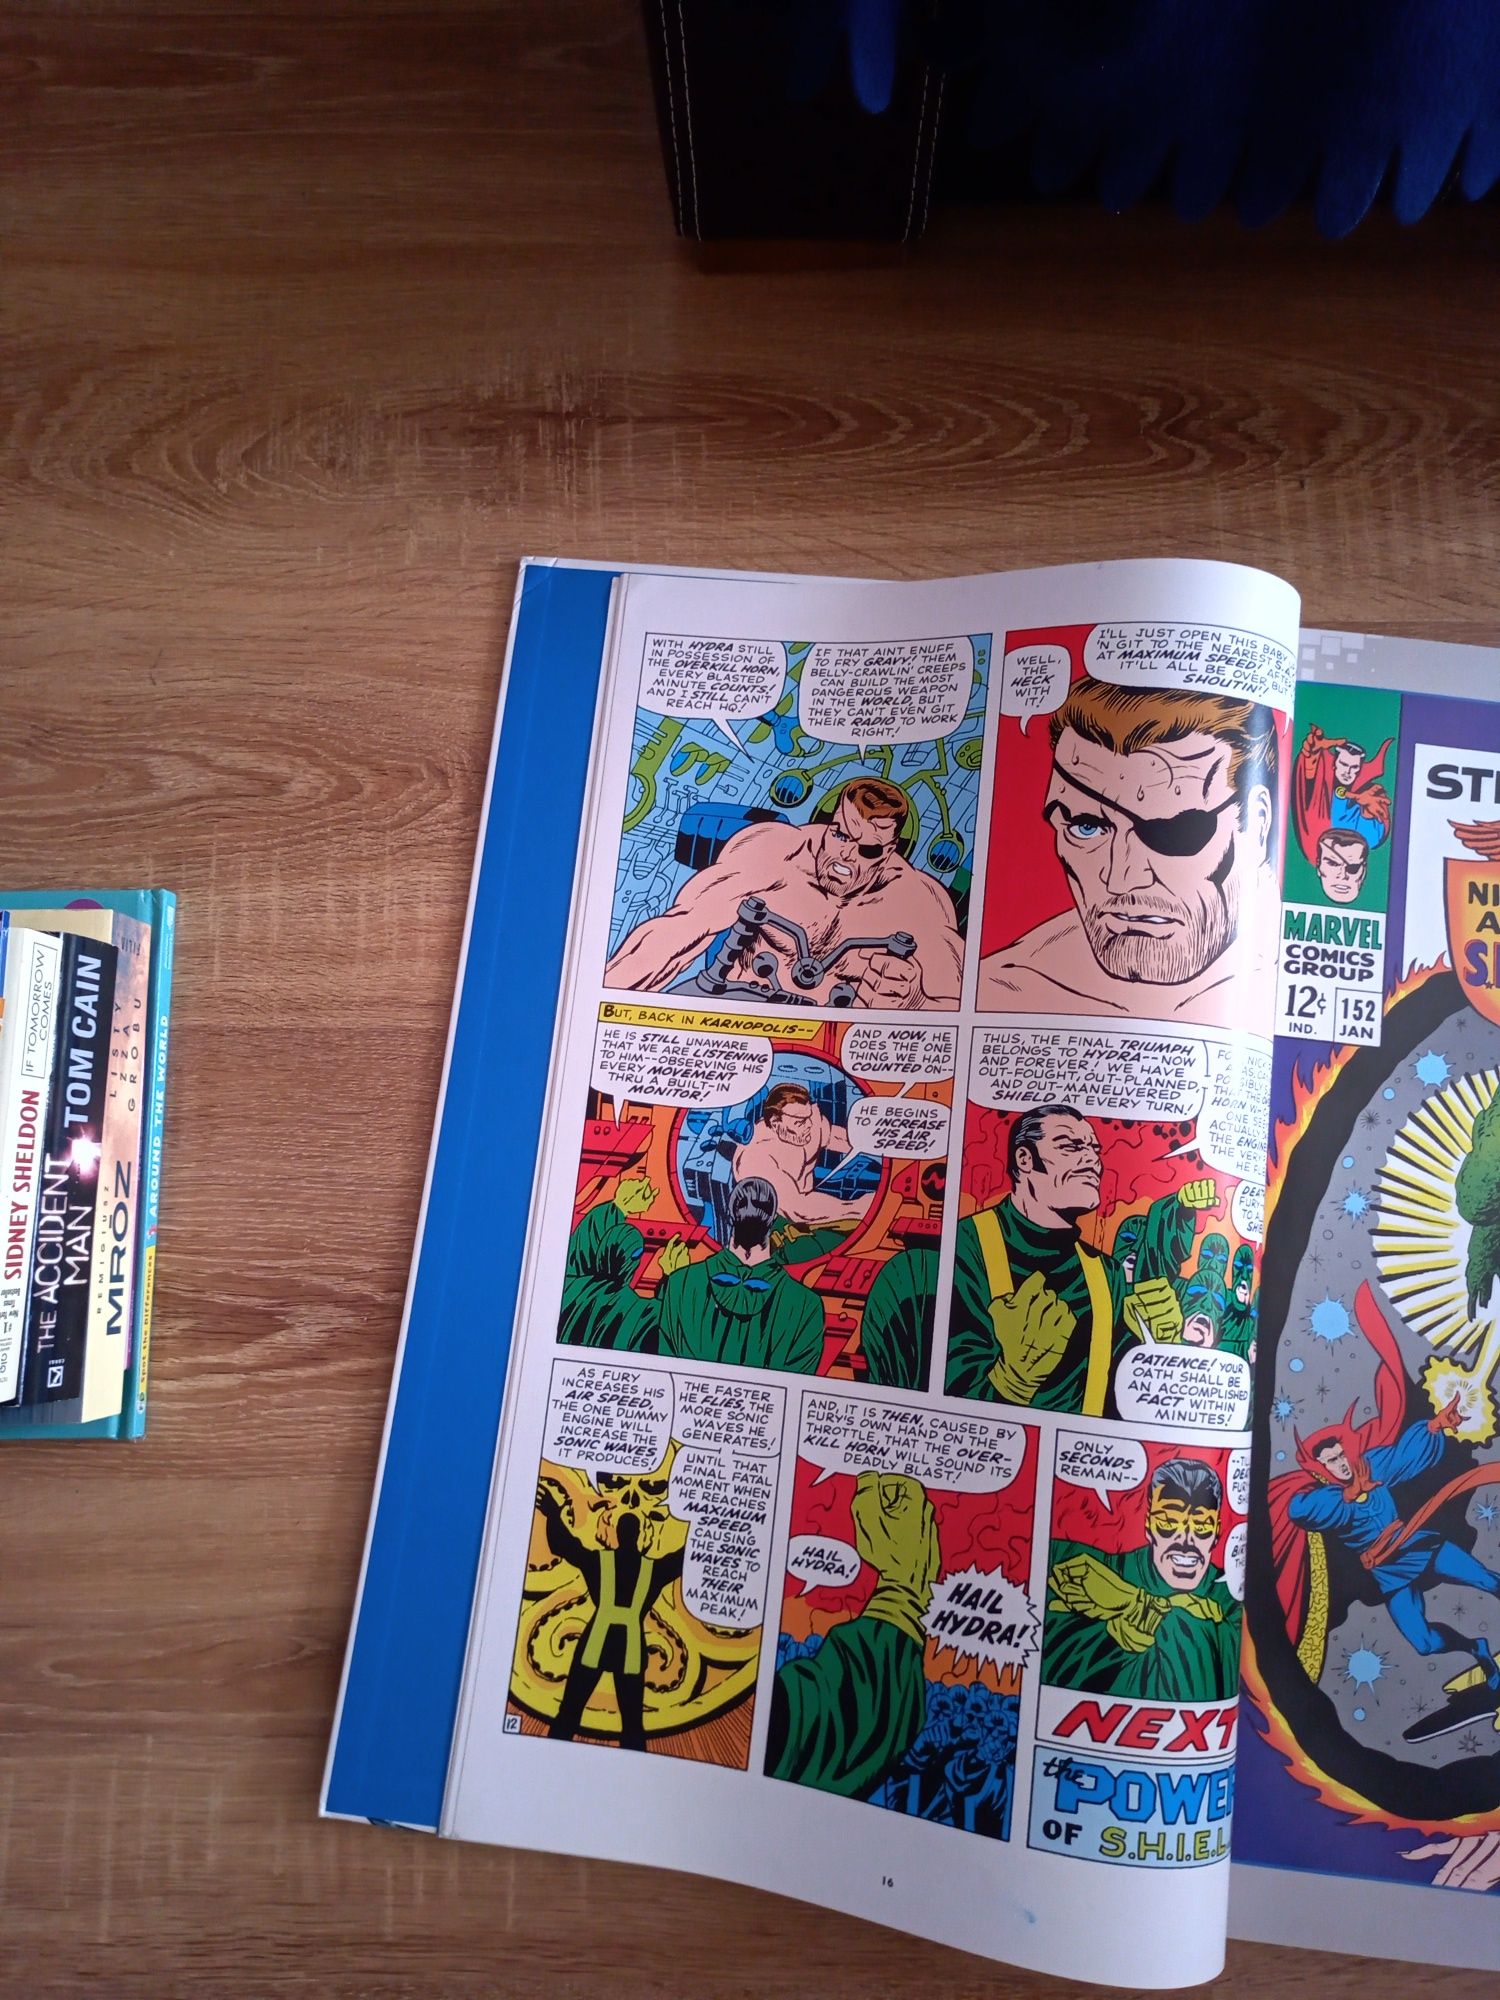 Ogromny komiks comics english Marvel Steranko is revolutionary